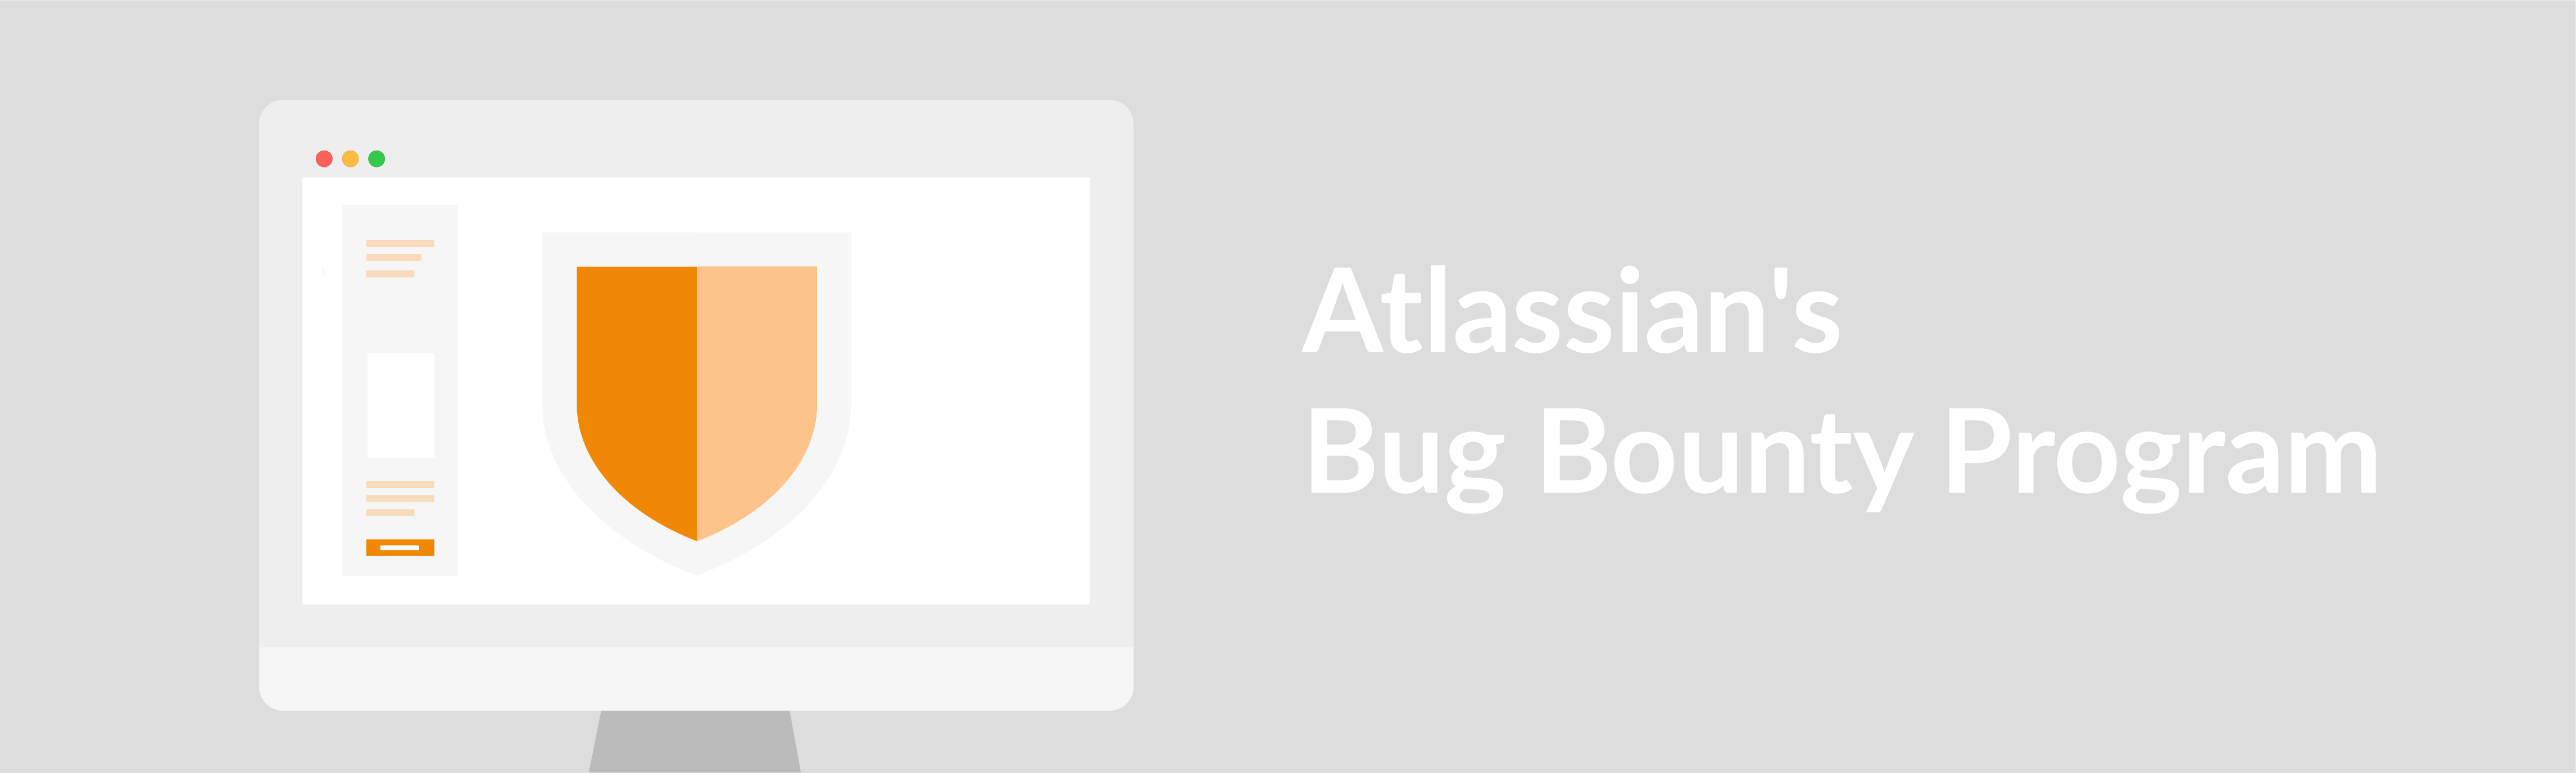 Atlassian's Bug Bounty Program